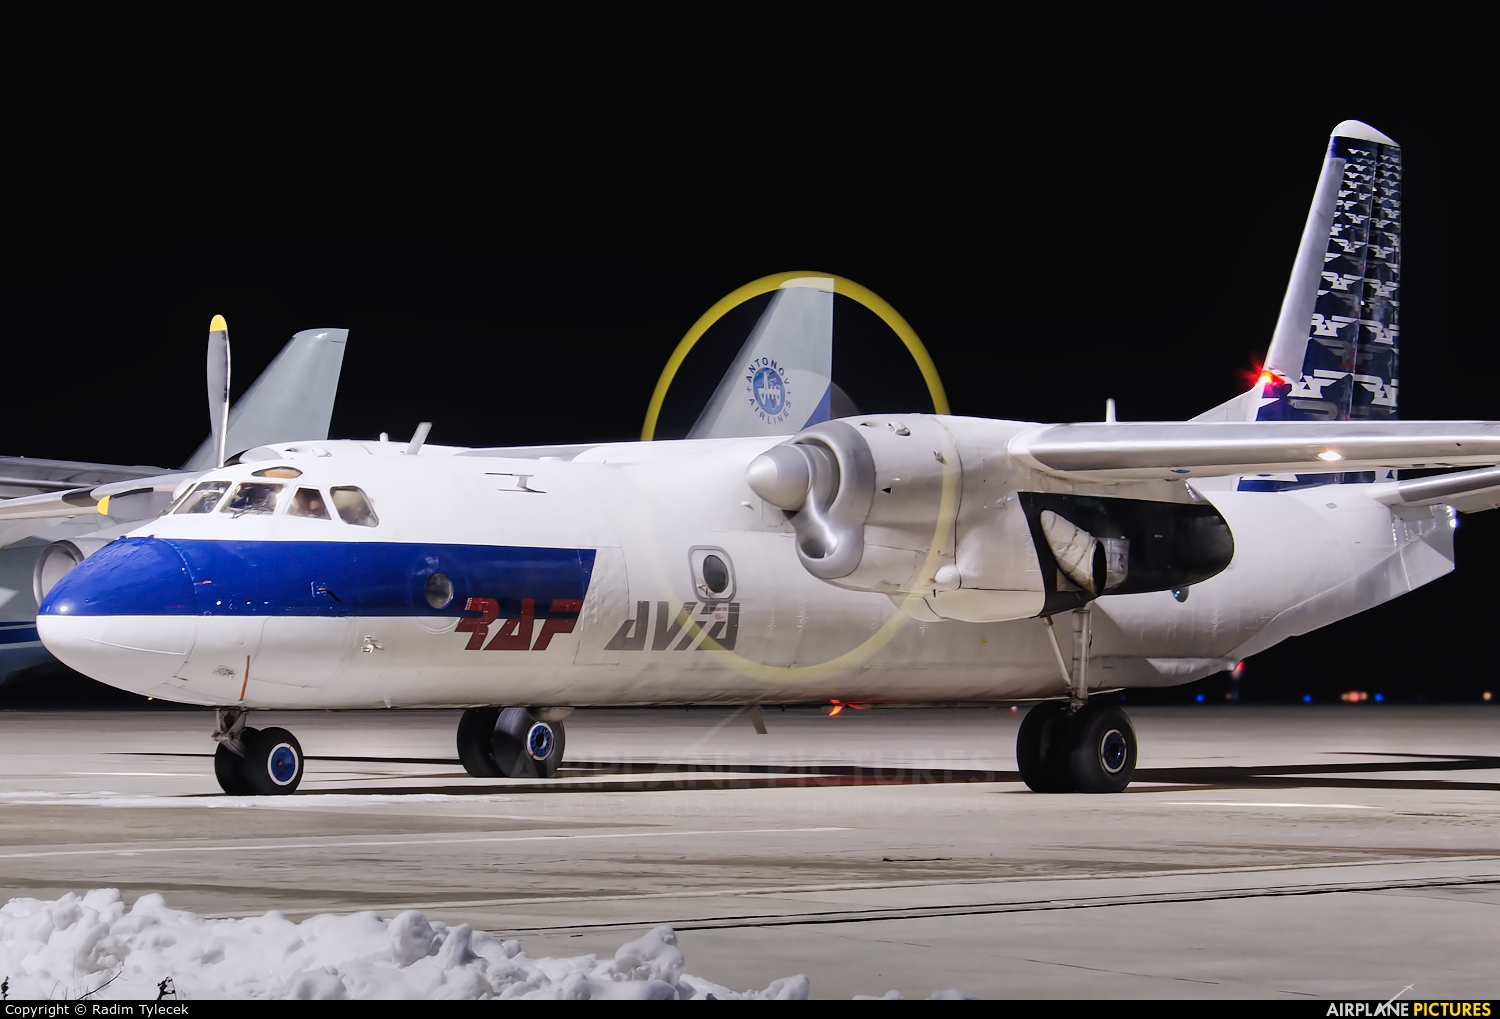 RAF Avia YL-RAB aircraft at Ostrava Mošnov